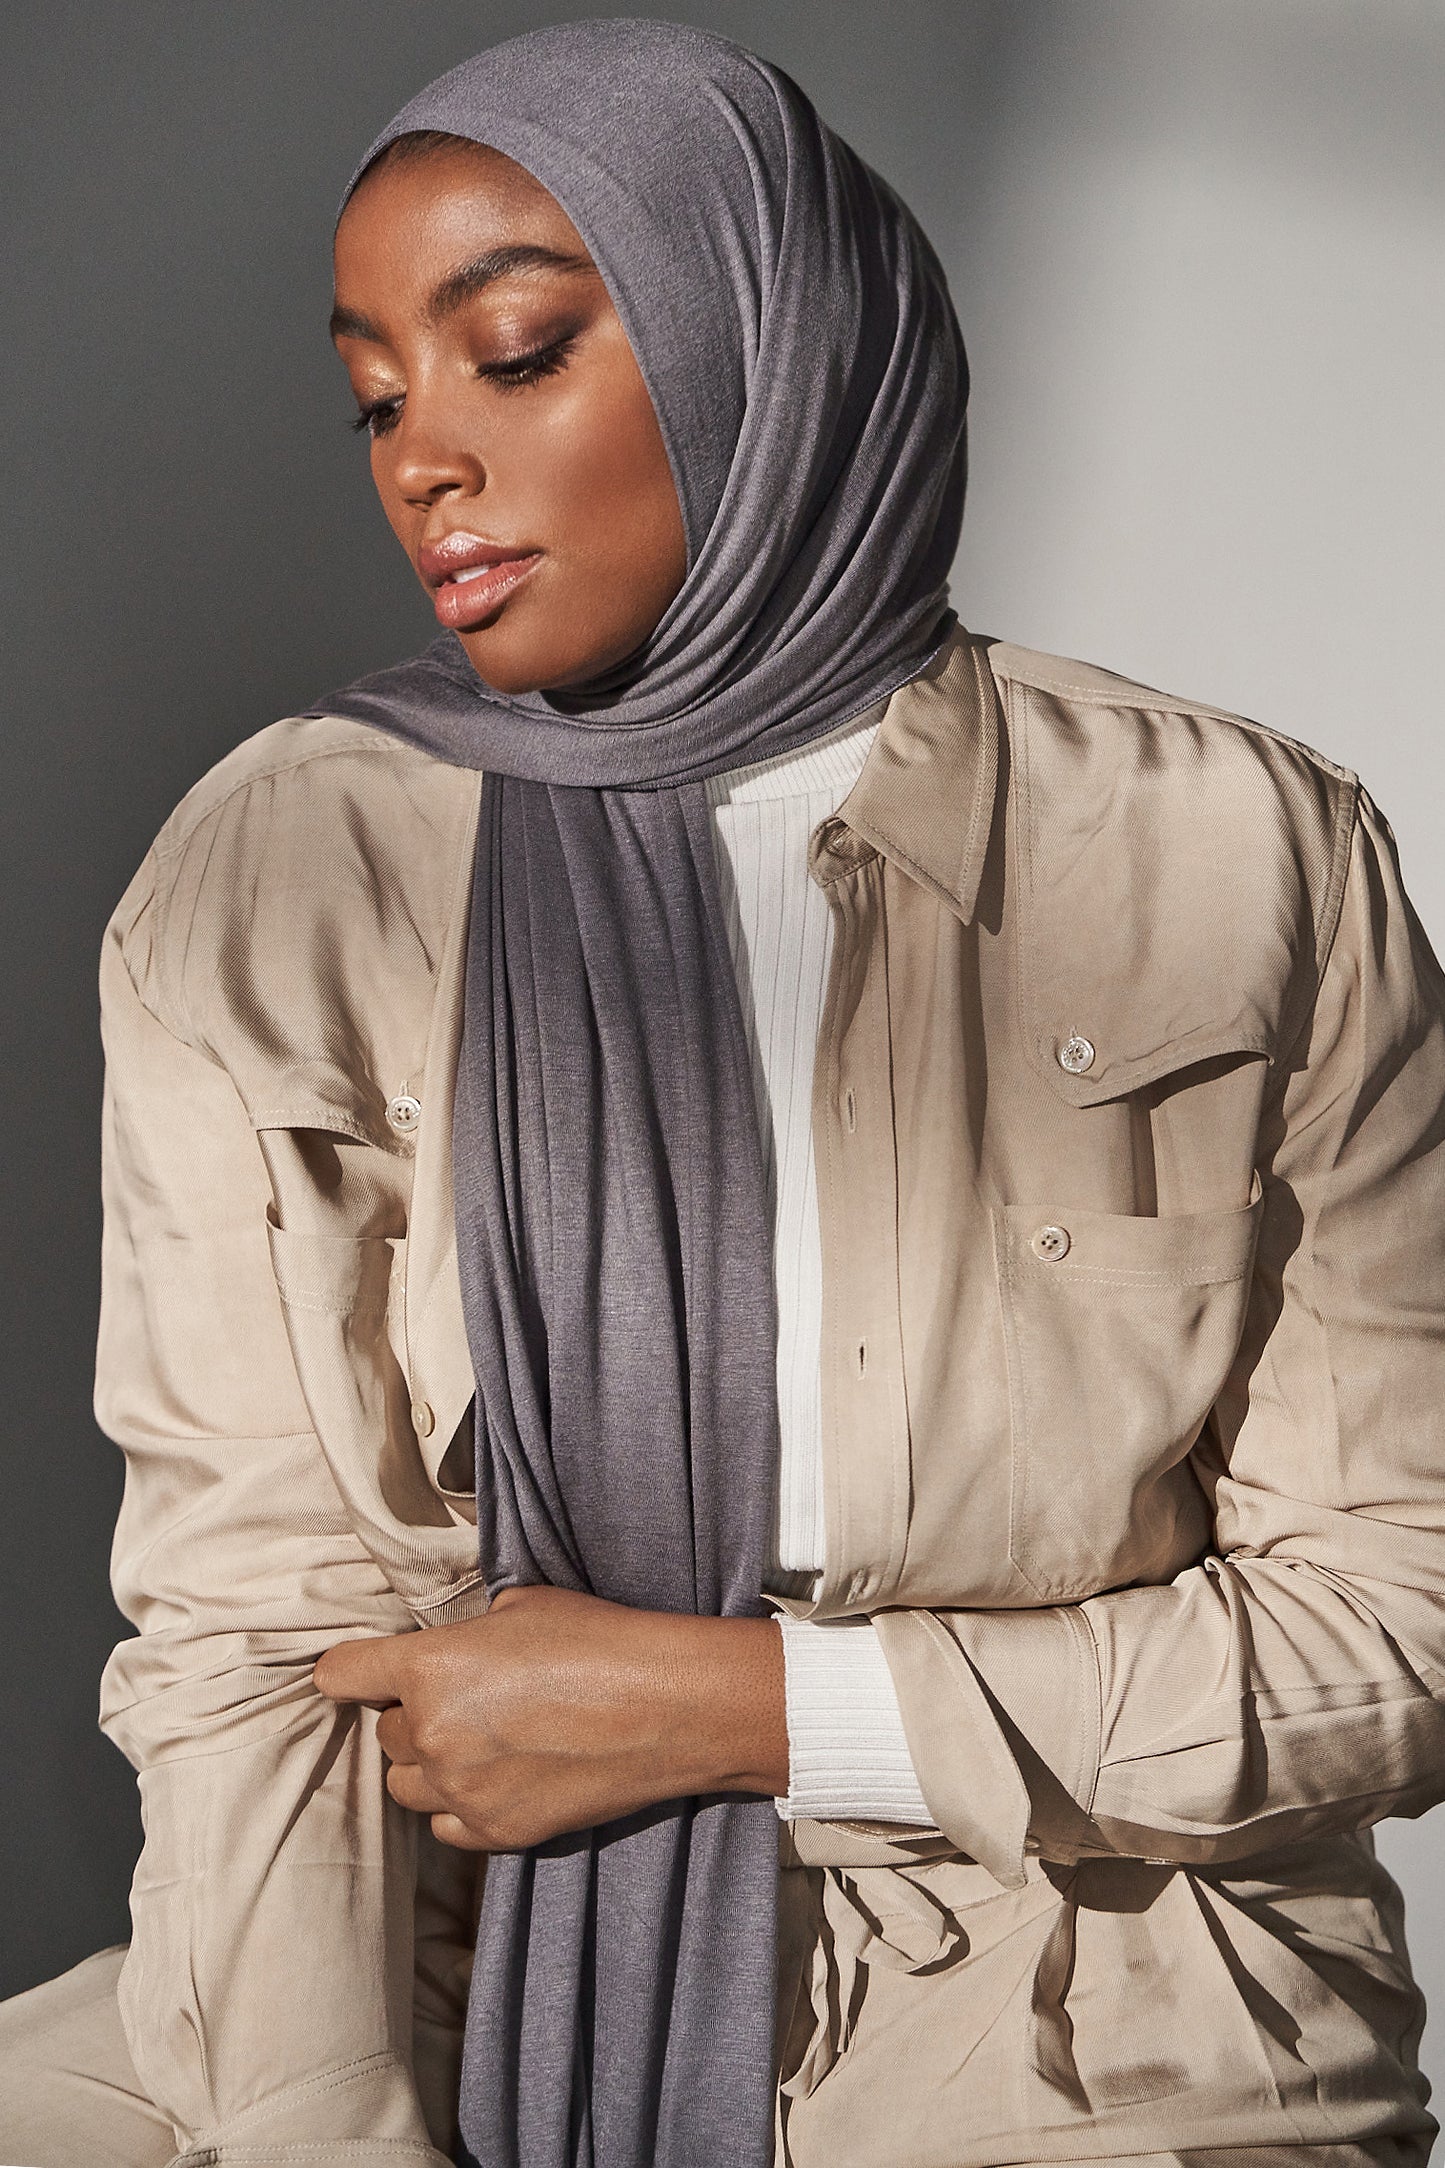 Premium Jersey Hijab - Graphite